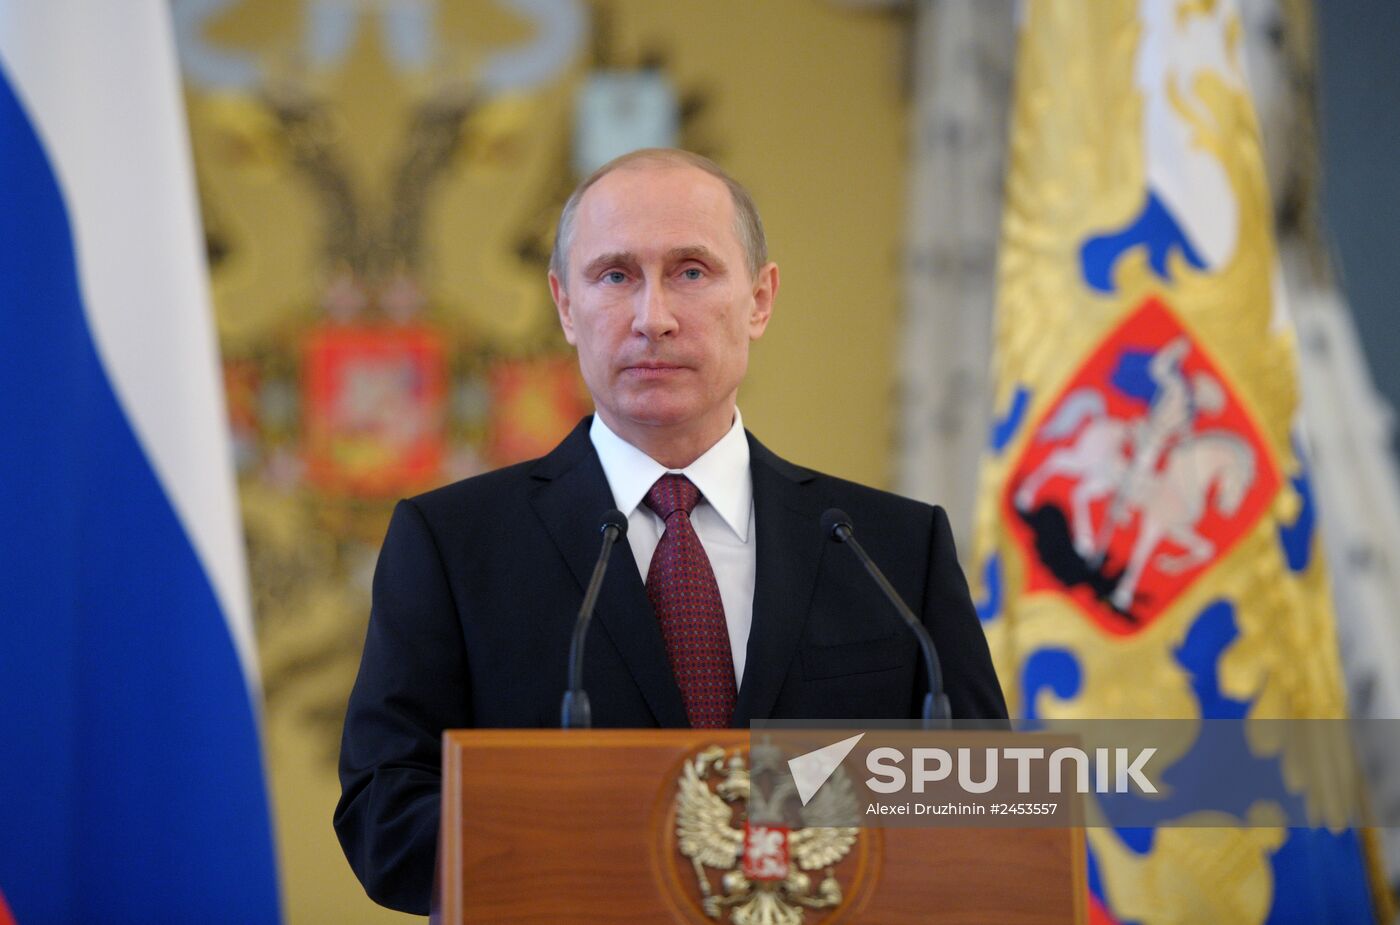 Putin holds reception for graduates of military academies